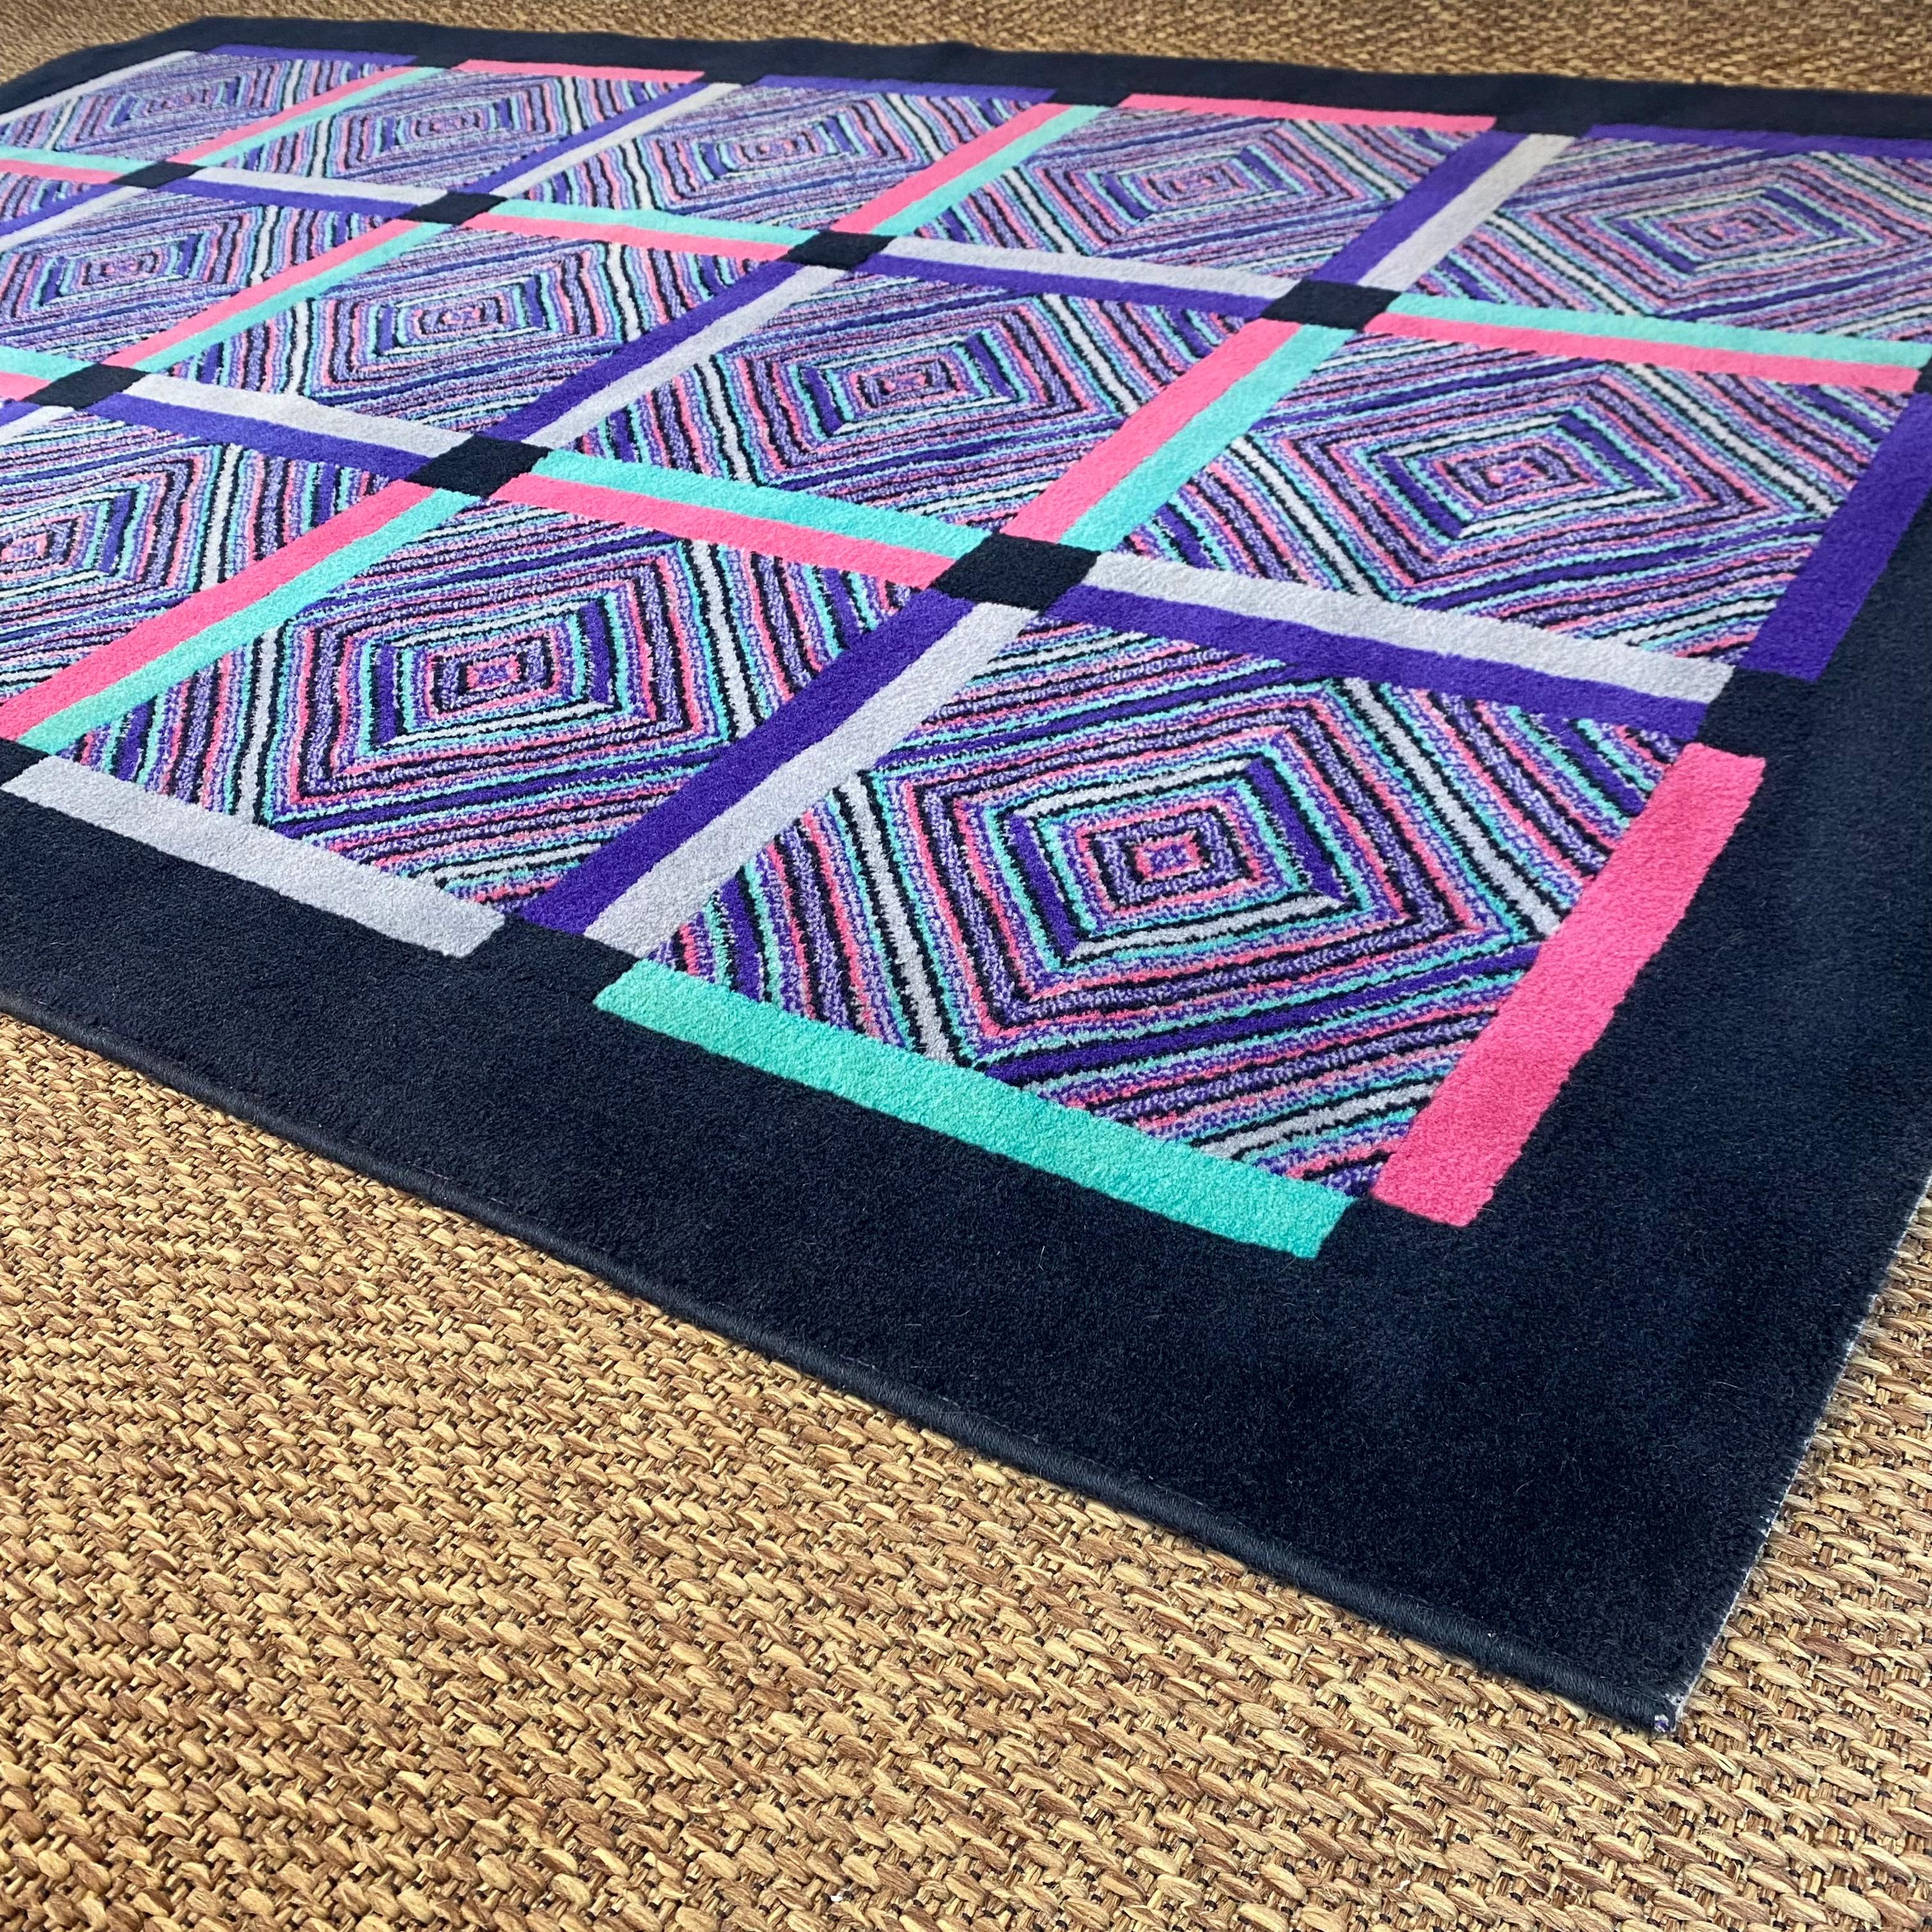 Ottavio Missoni's Geometrical Wool Carpet In Good Condition For Sale In Conversano, IT